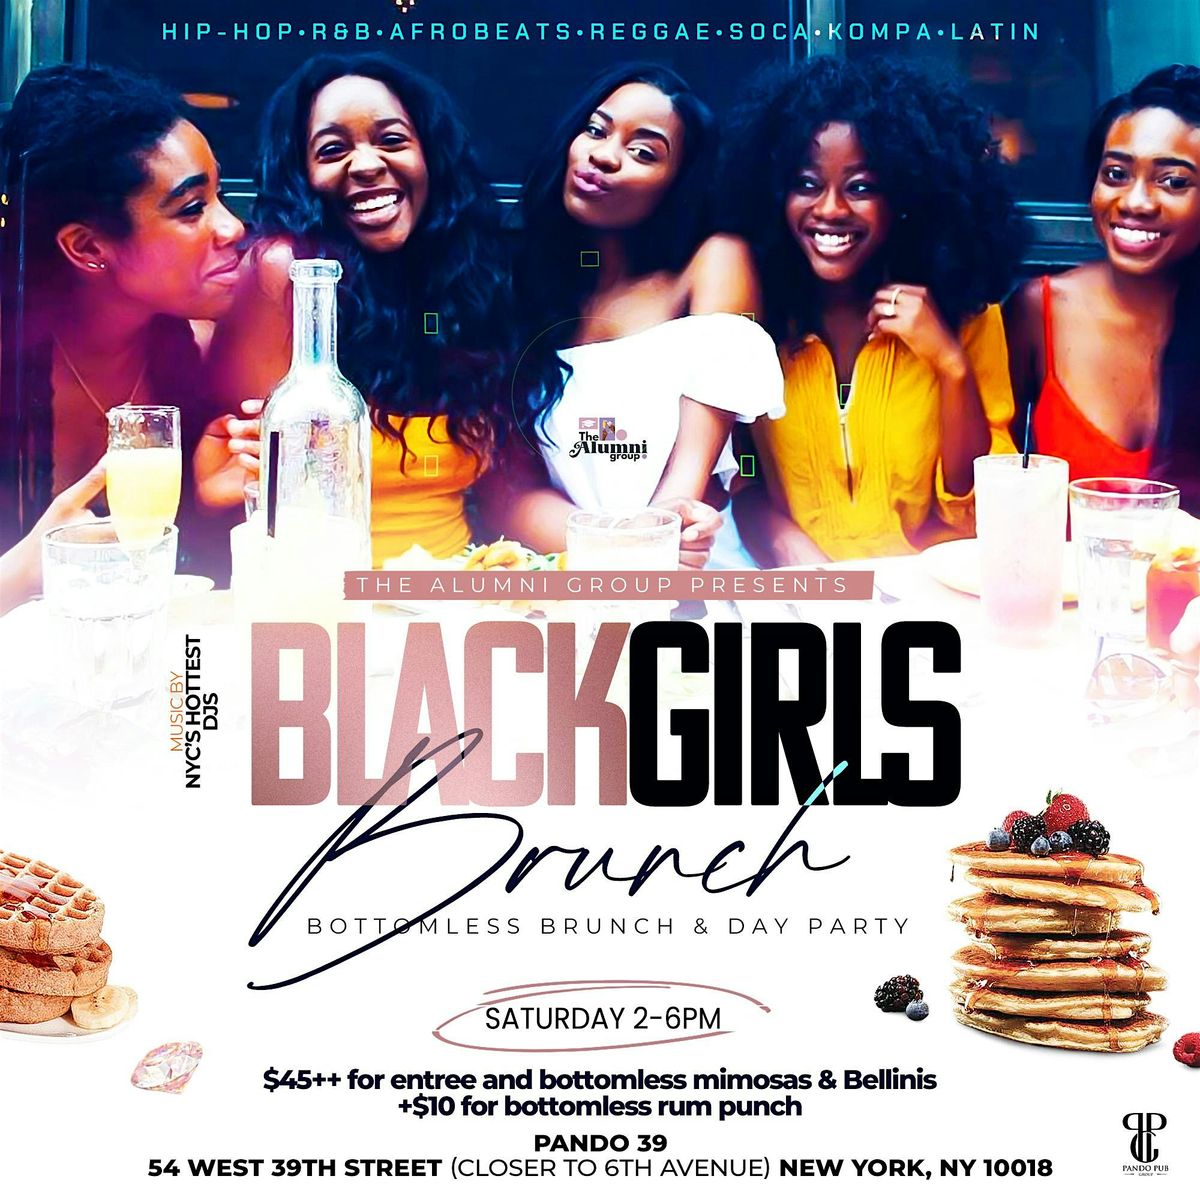 Black Girls Brunch - Bottomless Brunch & Day Party